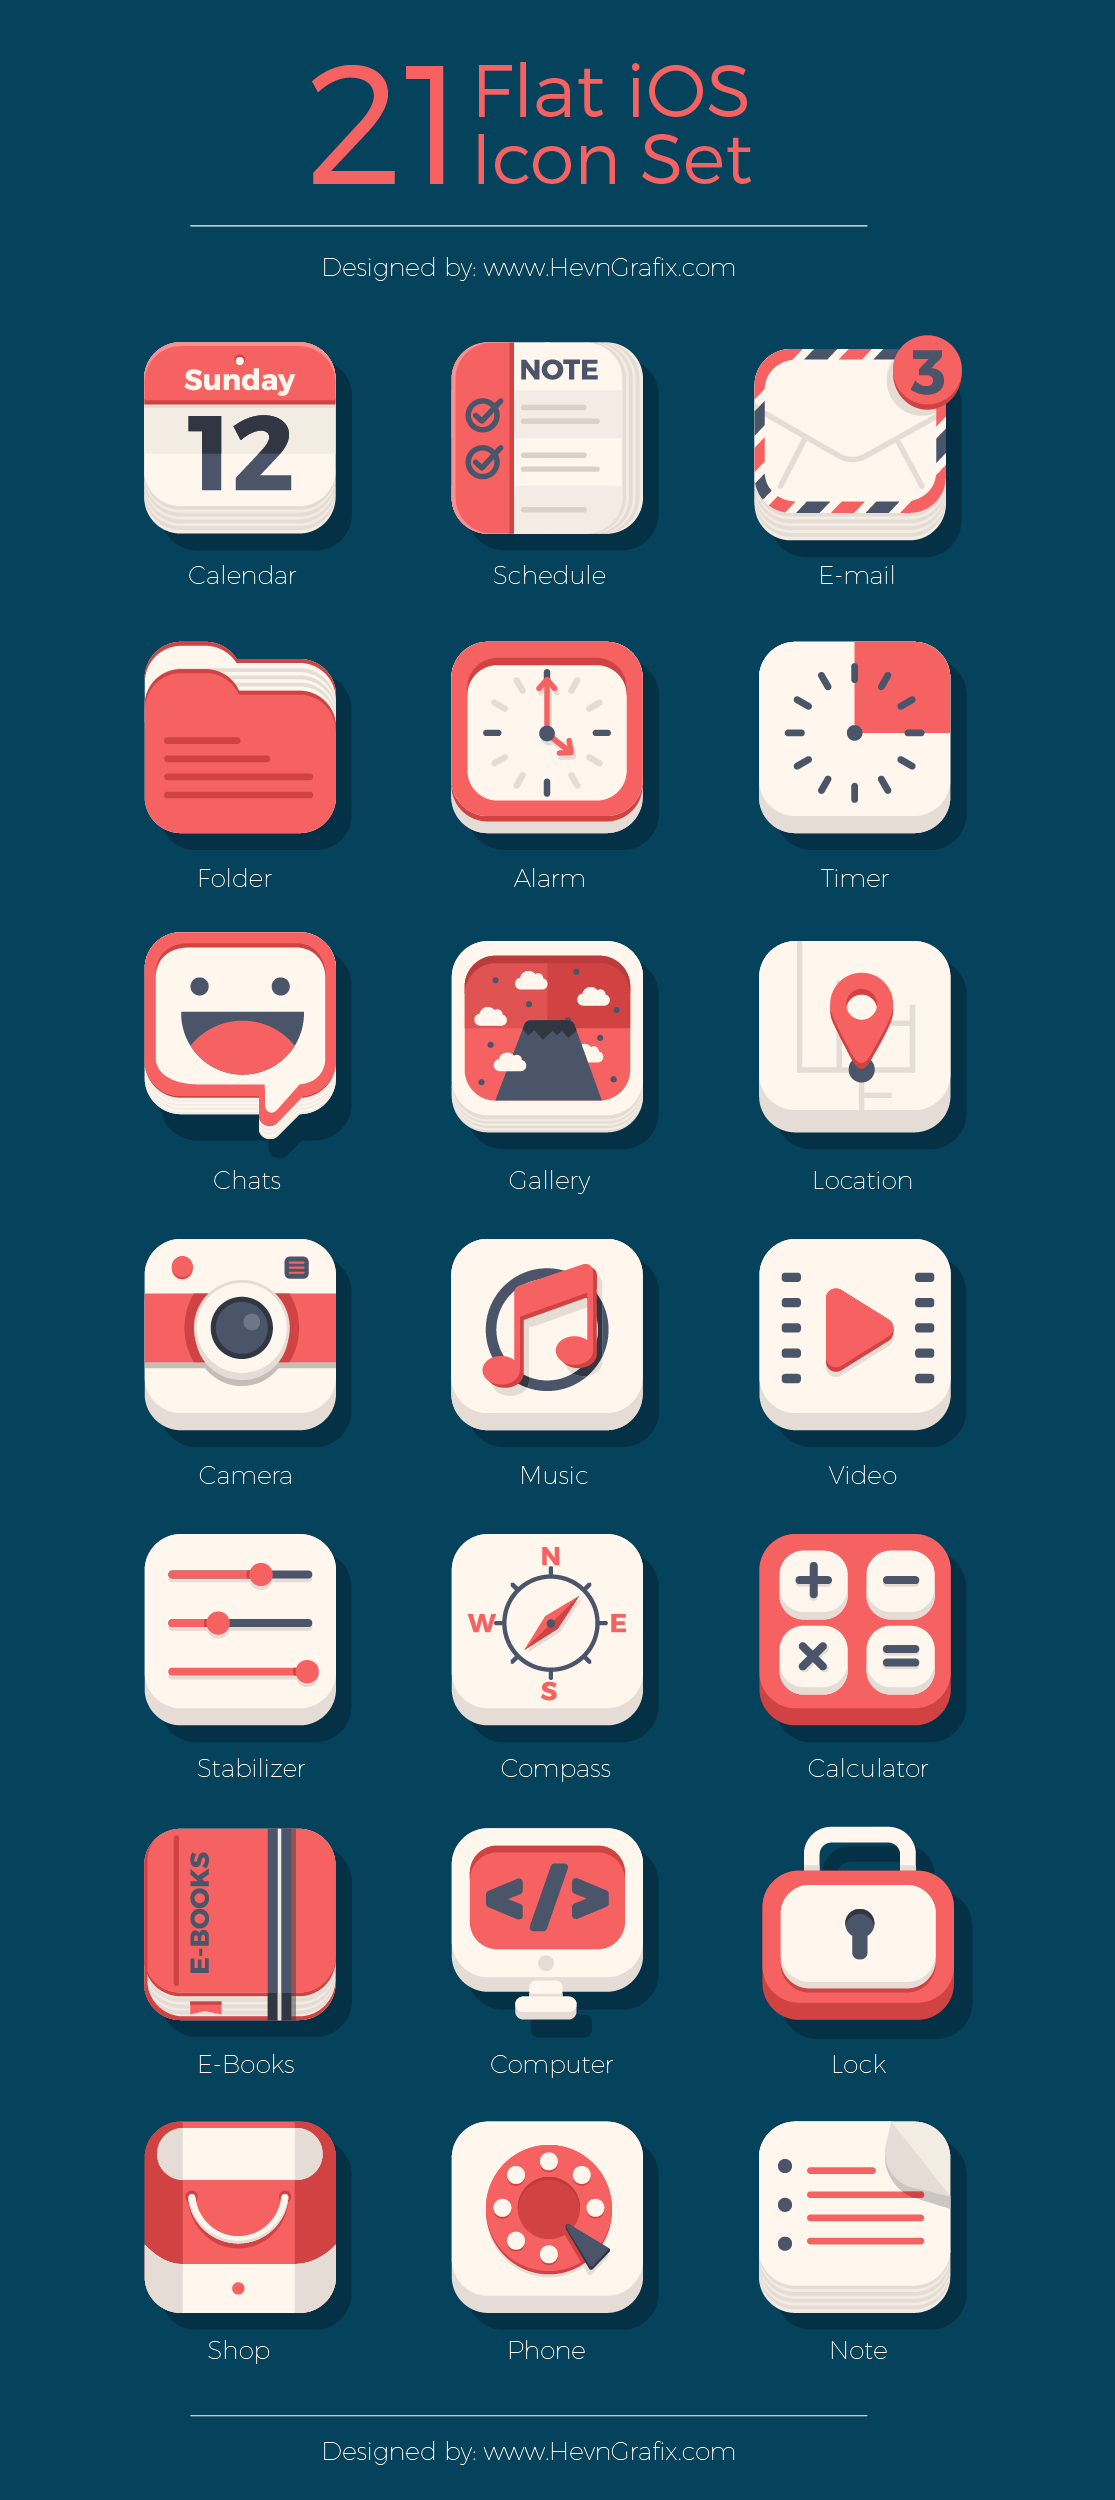 21 Free Flat iOS Icons 2015